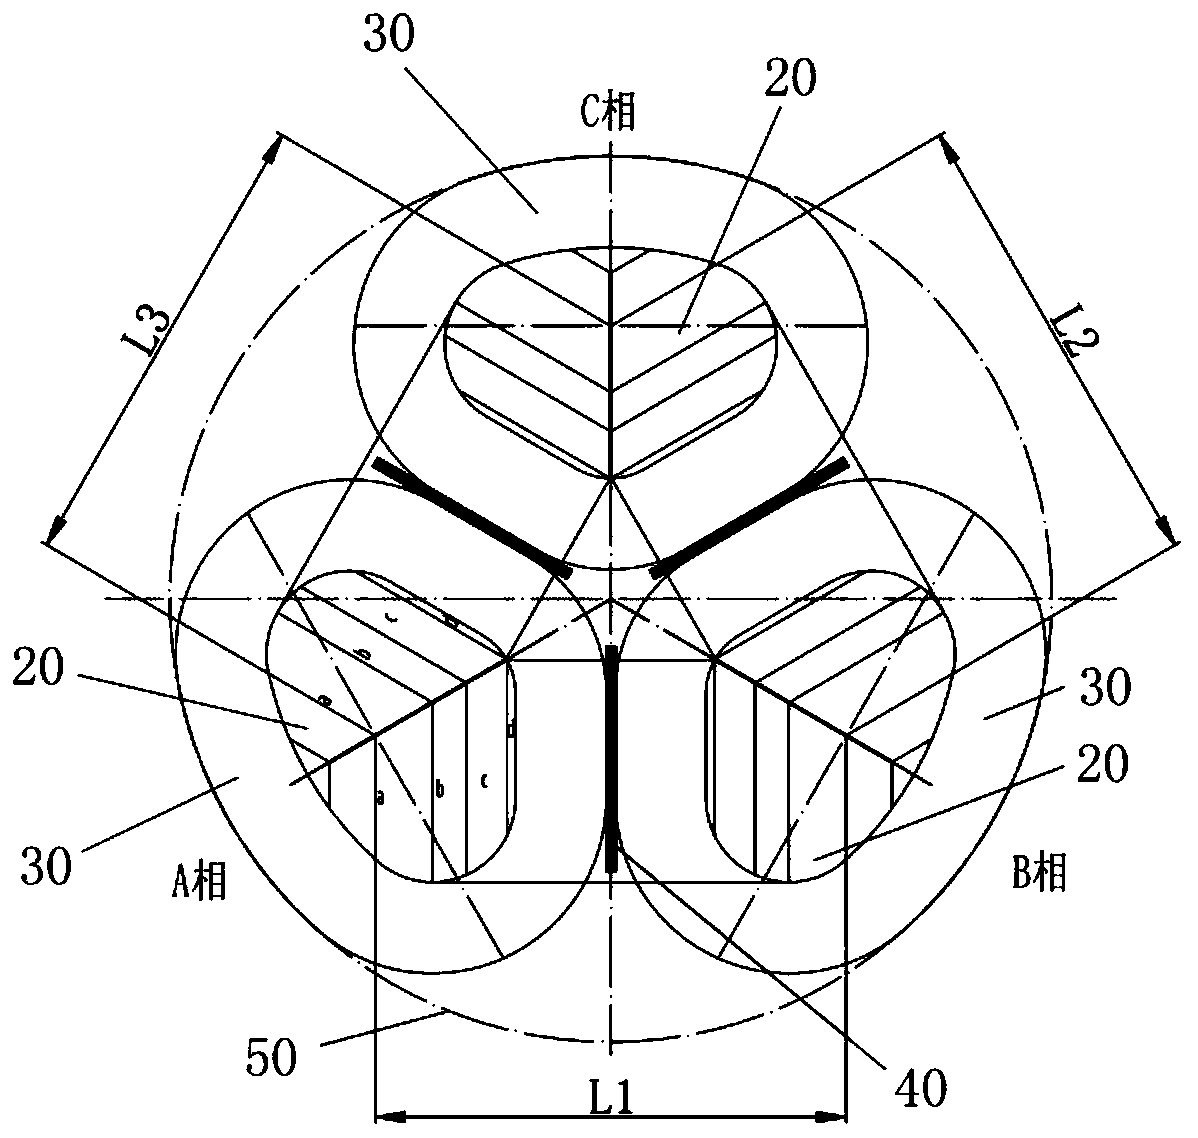 Three-phase three-dimensional non-circular transformer body structure